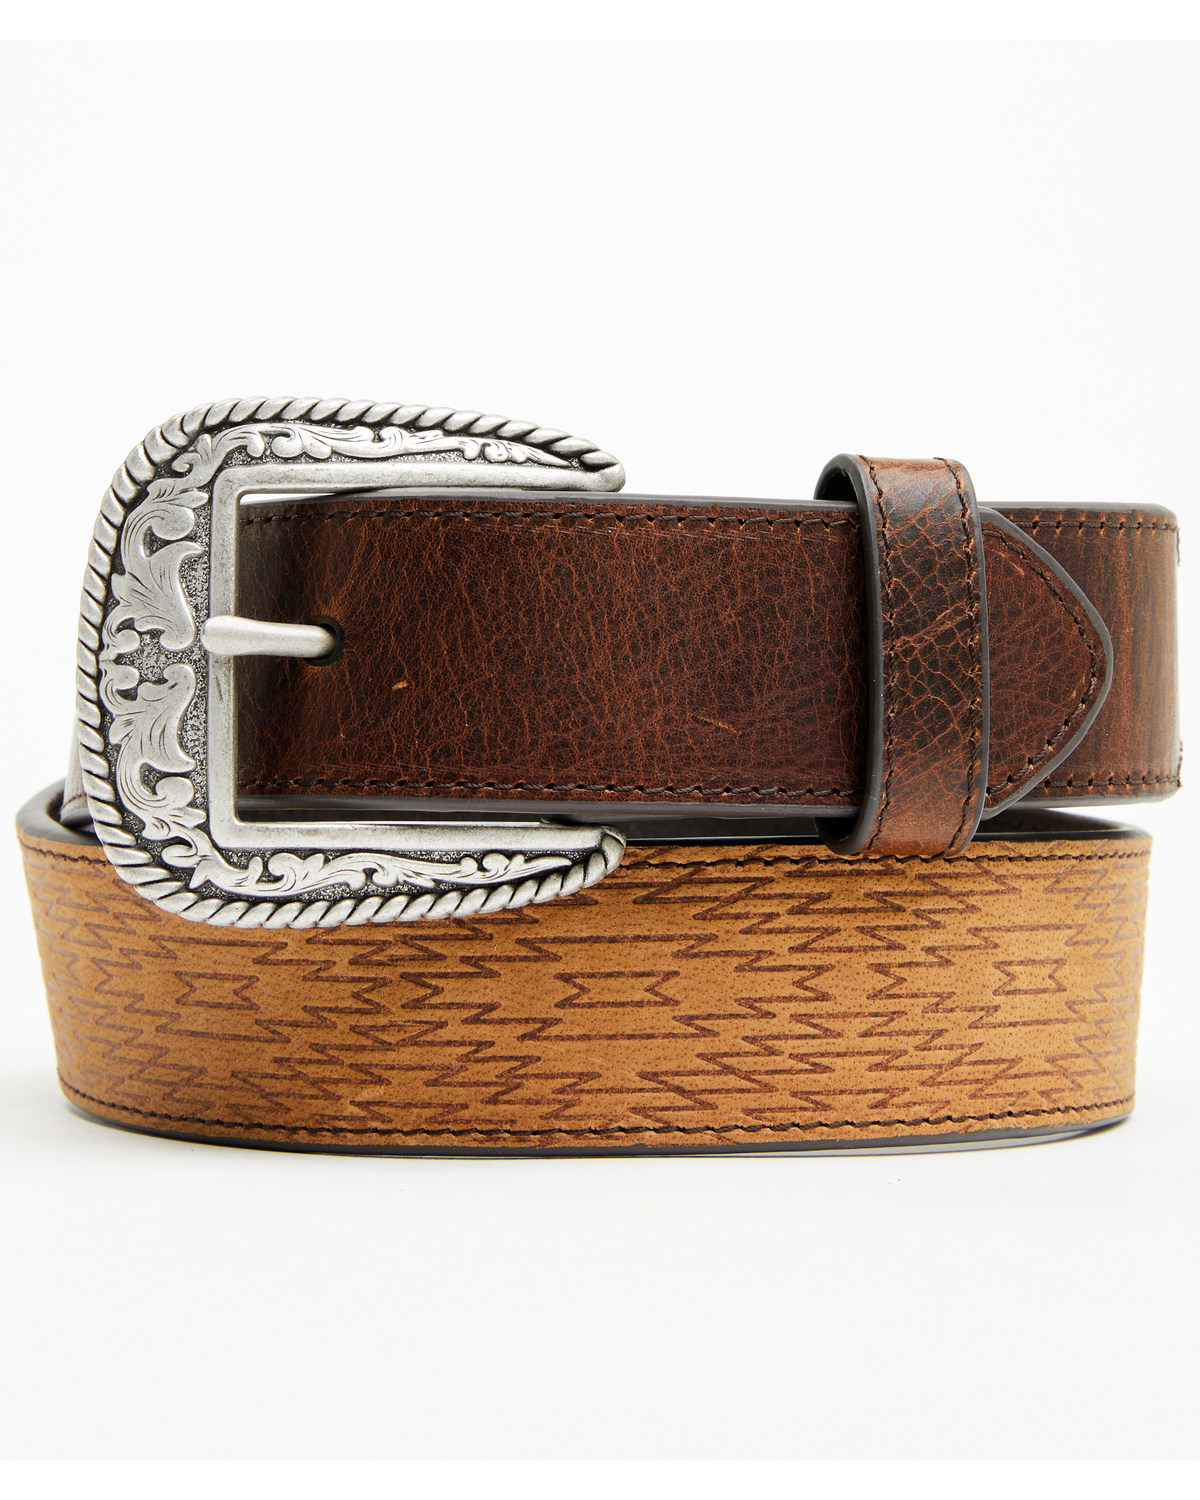 RANK 45® Men's Holt Southwestern Embossed Leather Belt